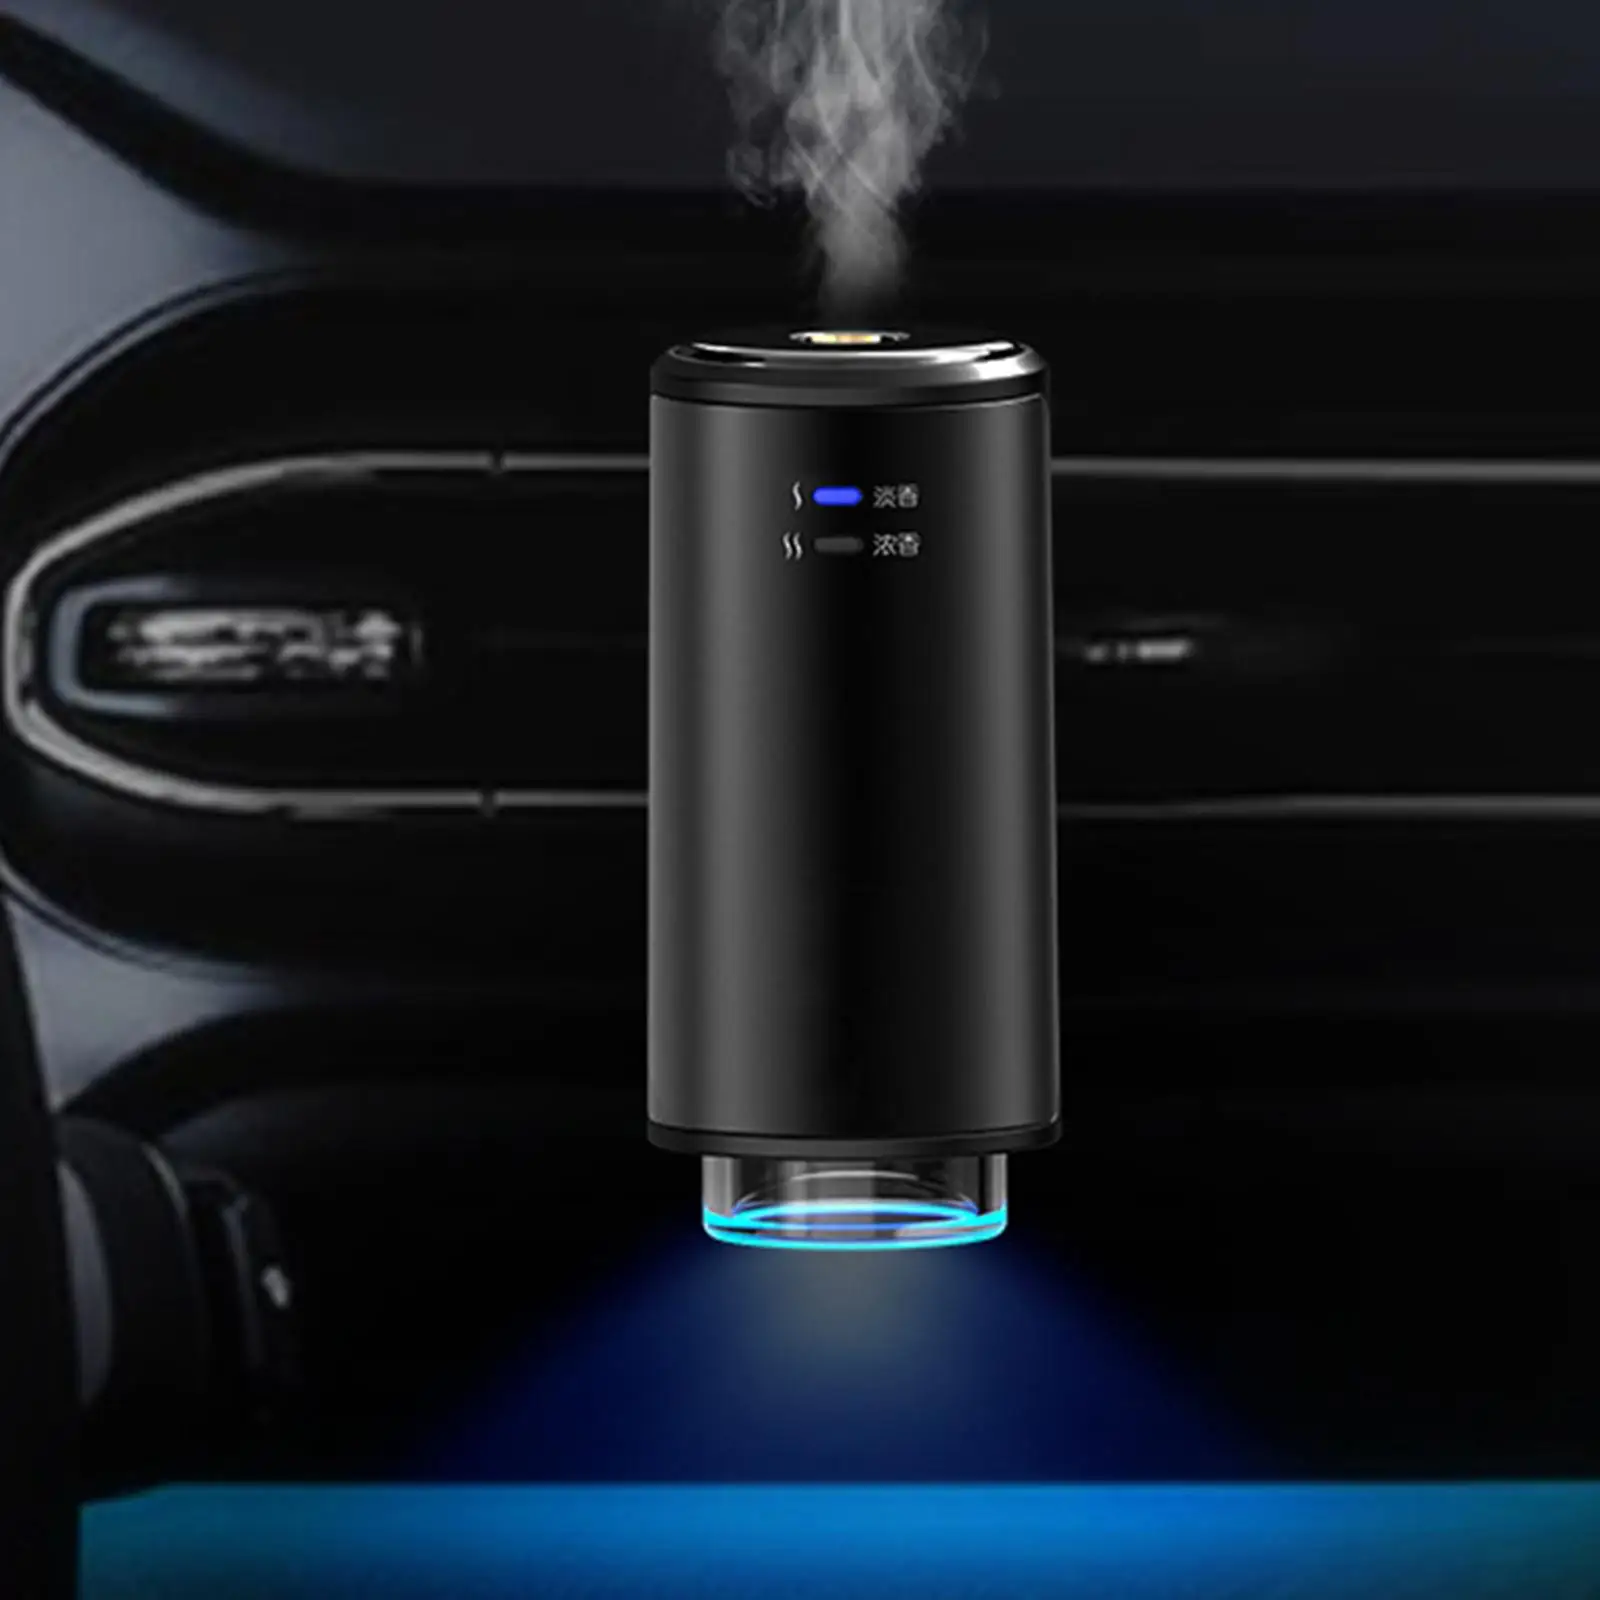      Humidifiers Perfume USB Car  Freshener for Bathroom Car Air Outlet